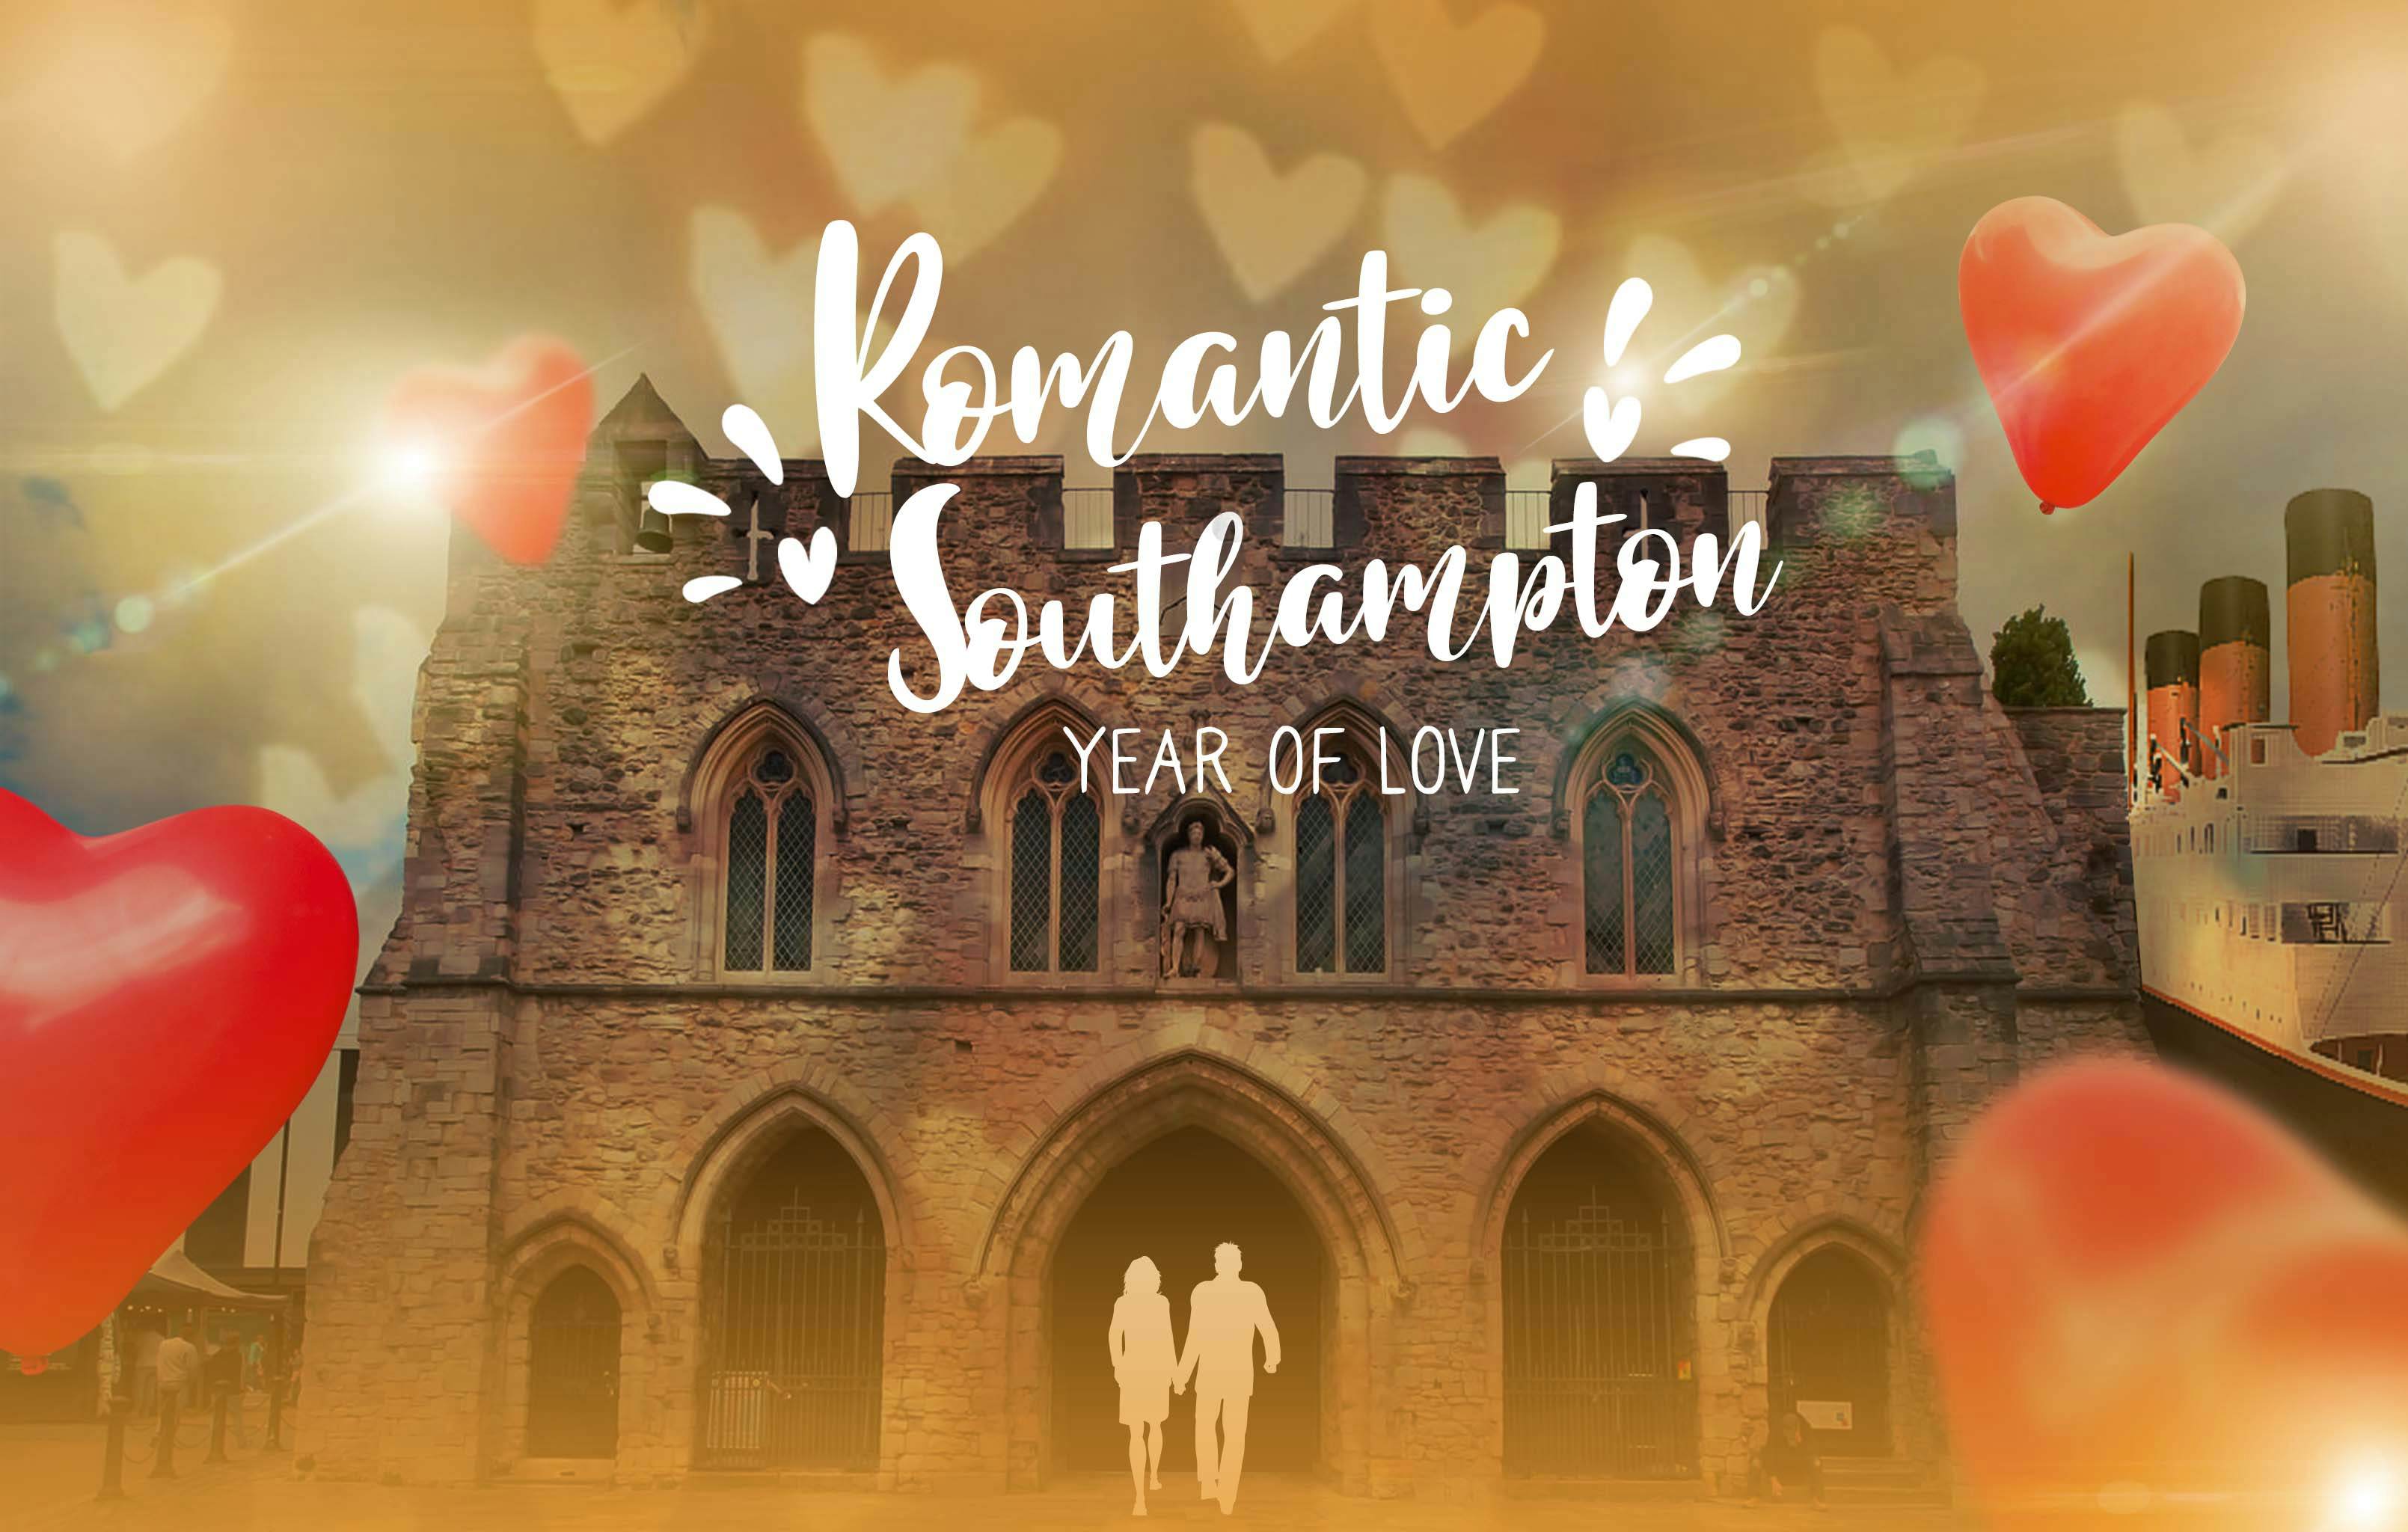 Romantic Southampton: Year of Love image